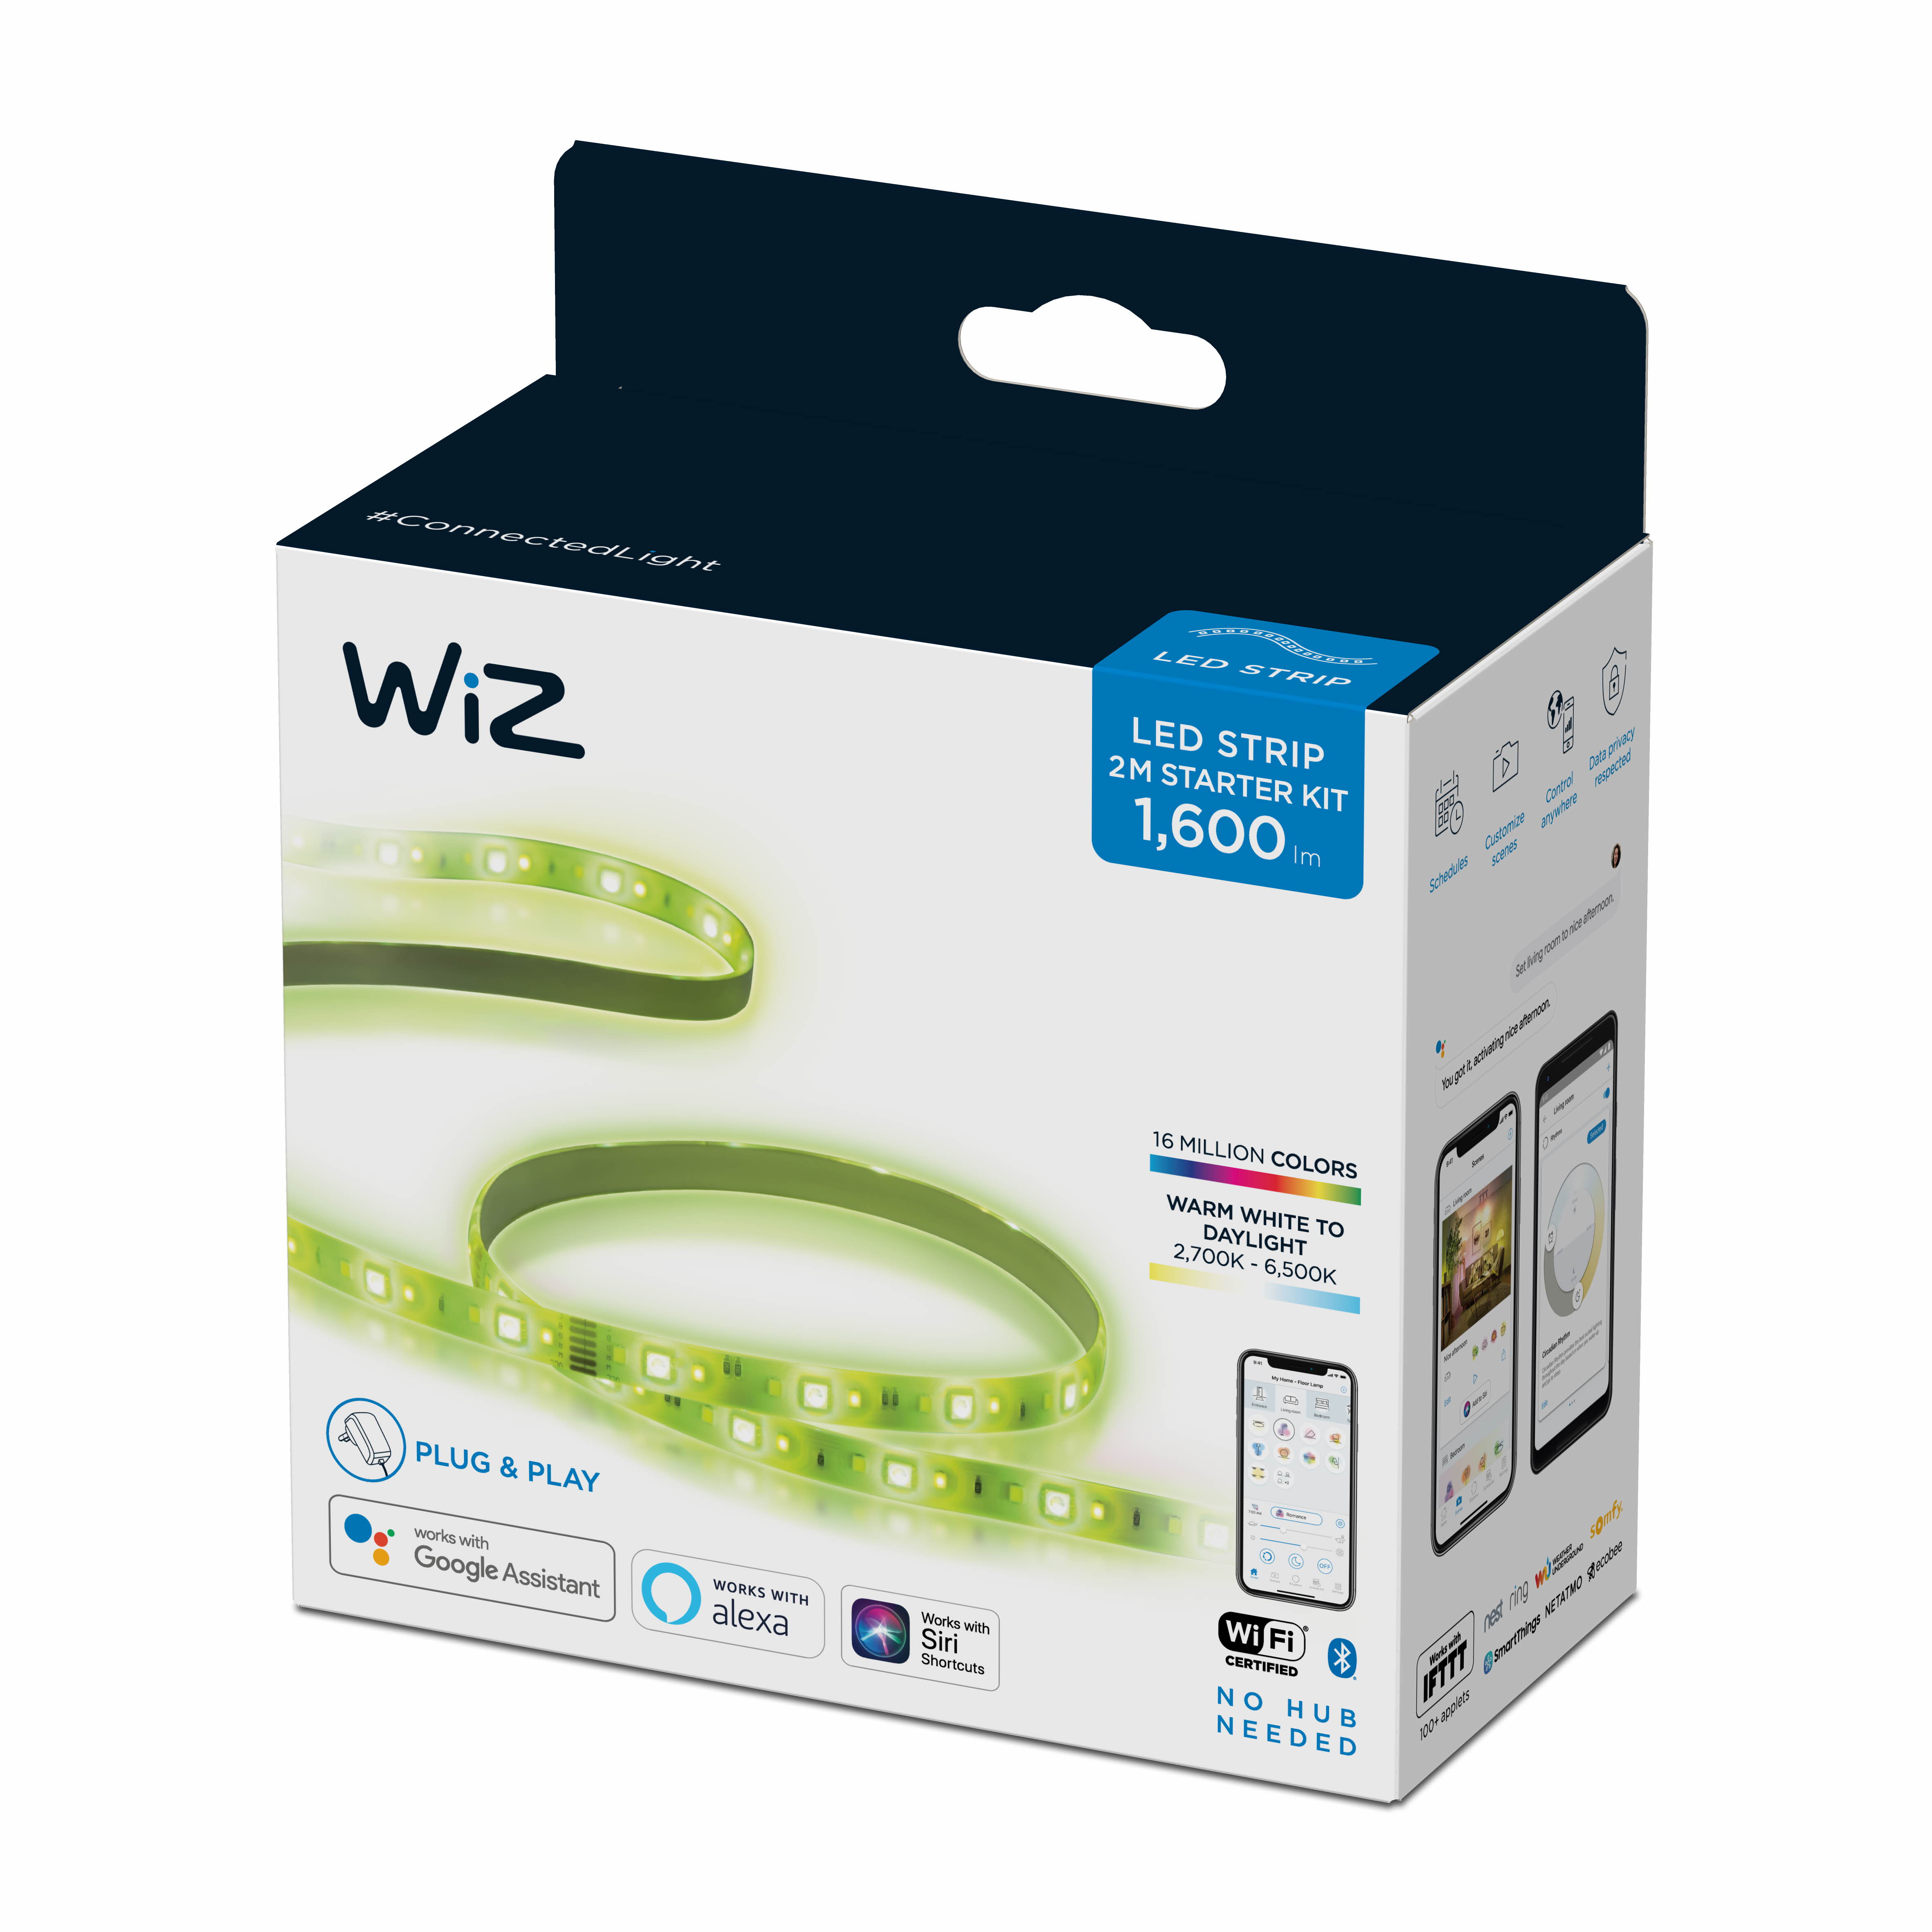 WiZ -Wi-Fi LEDStrip 2M 1600lm StarterKit